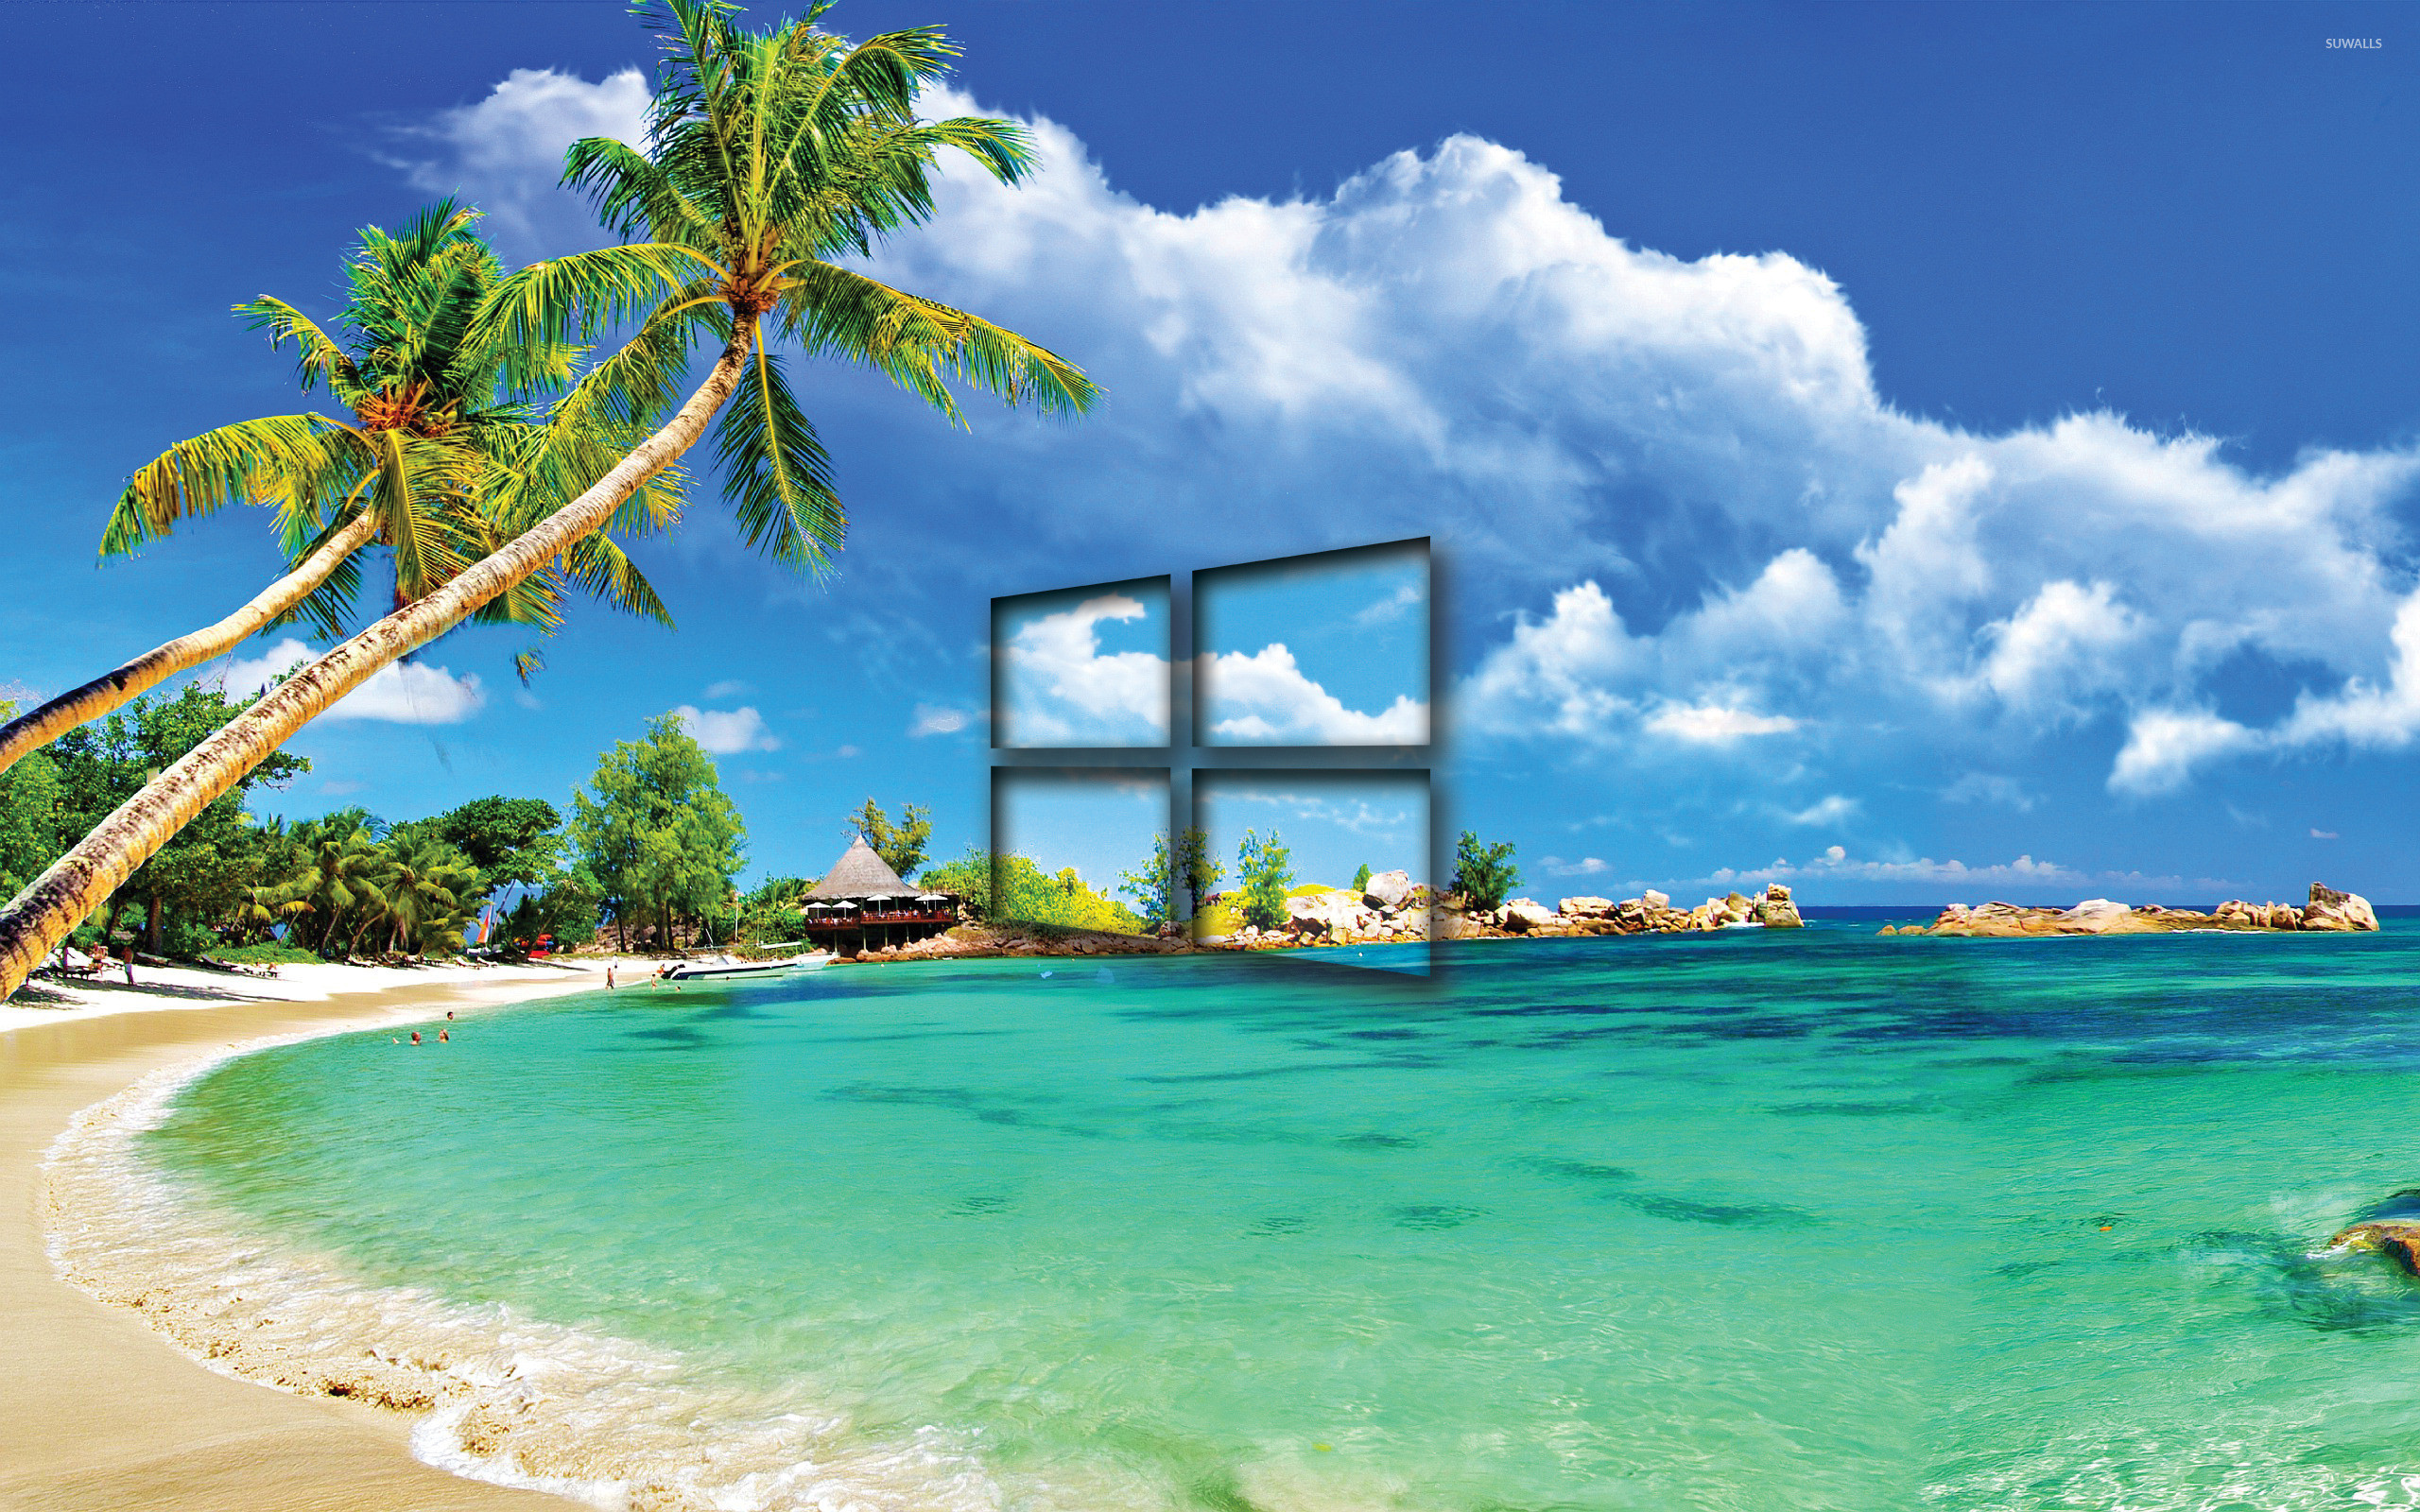 2560x1600 Windows 10 transparent logo on a tropical beach wallpaper